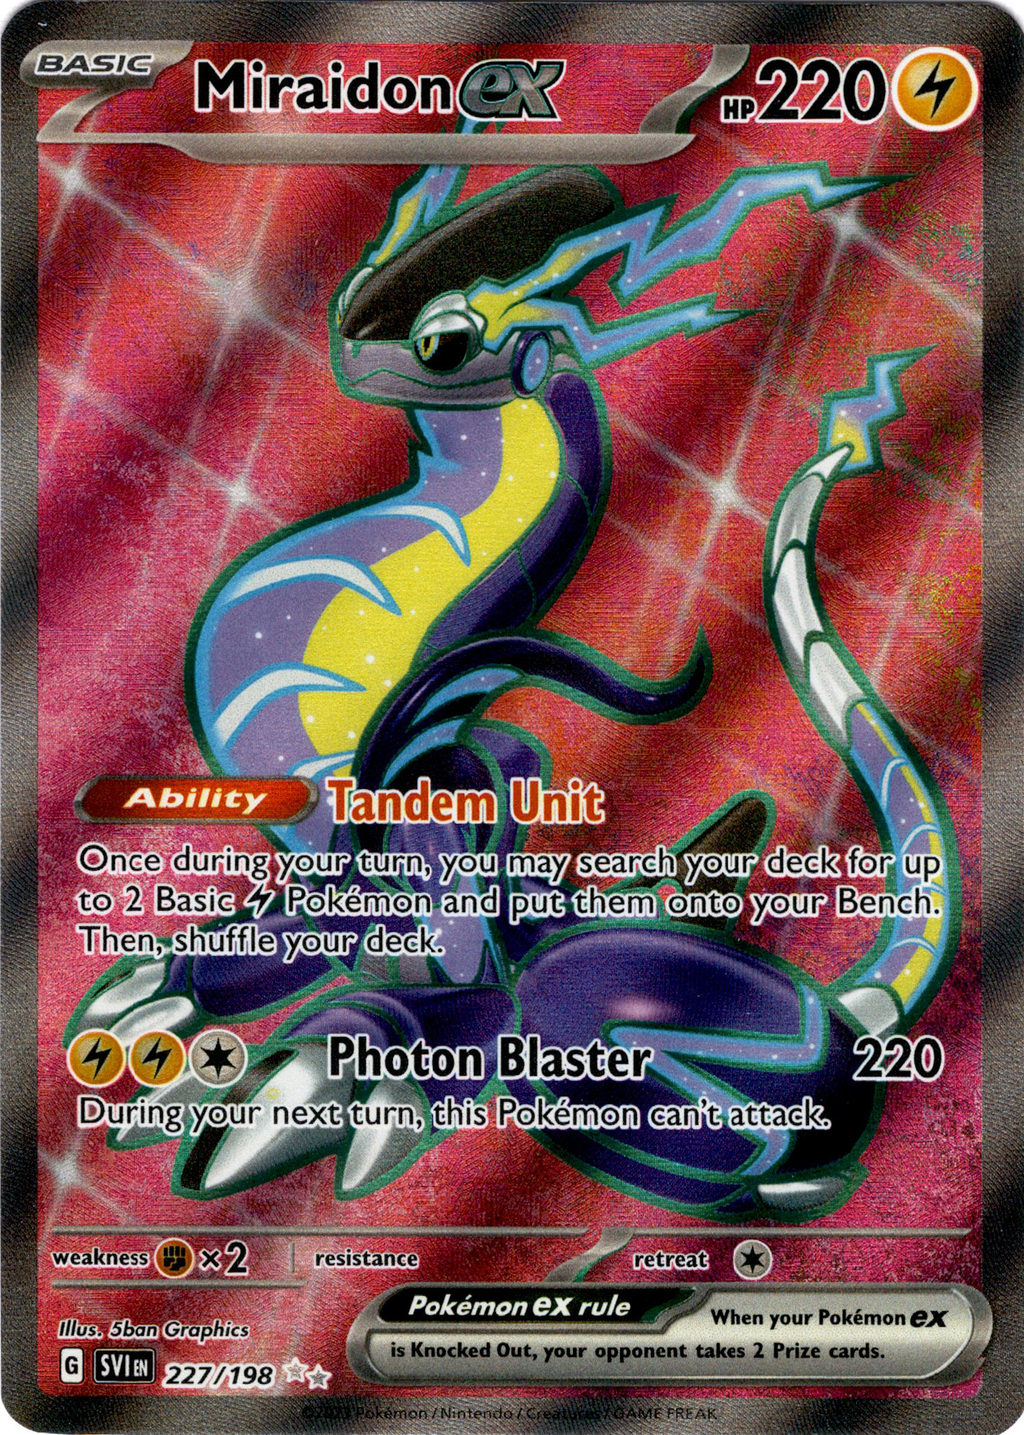 Koraidon ex 125/198 in Portuguese Scarlet & Violet Pokémon TCG